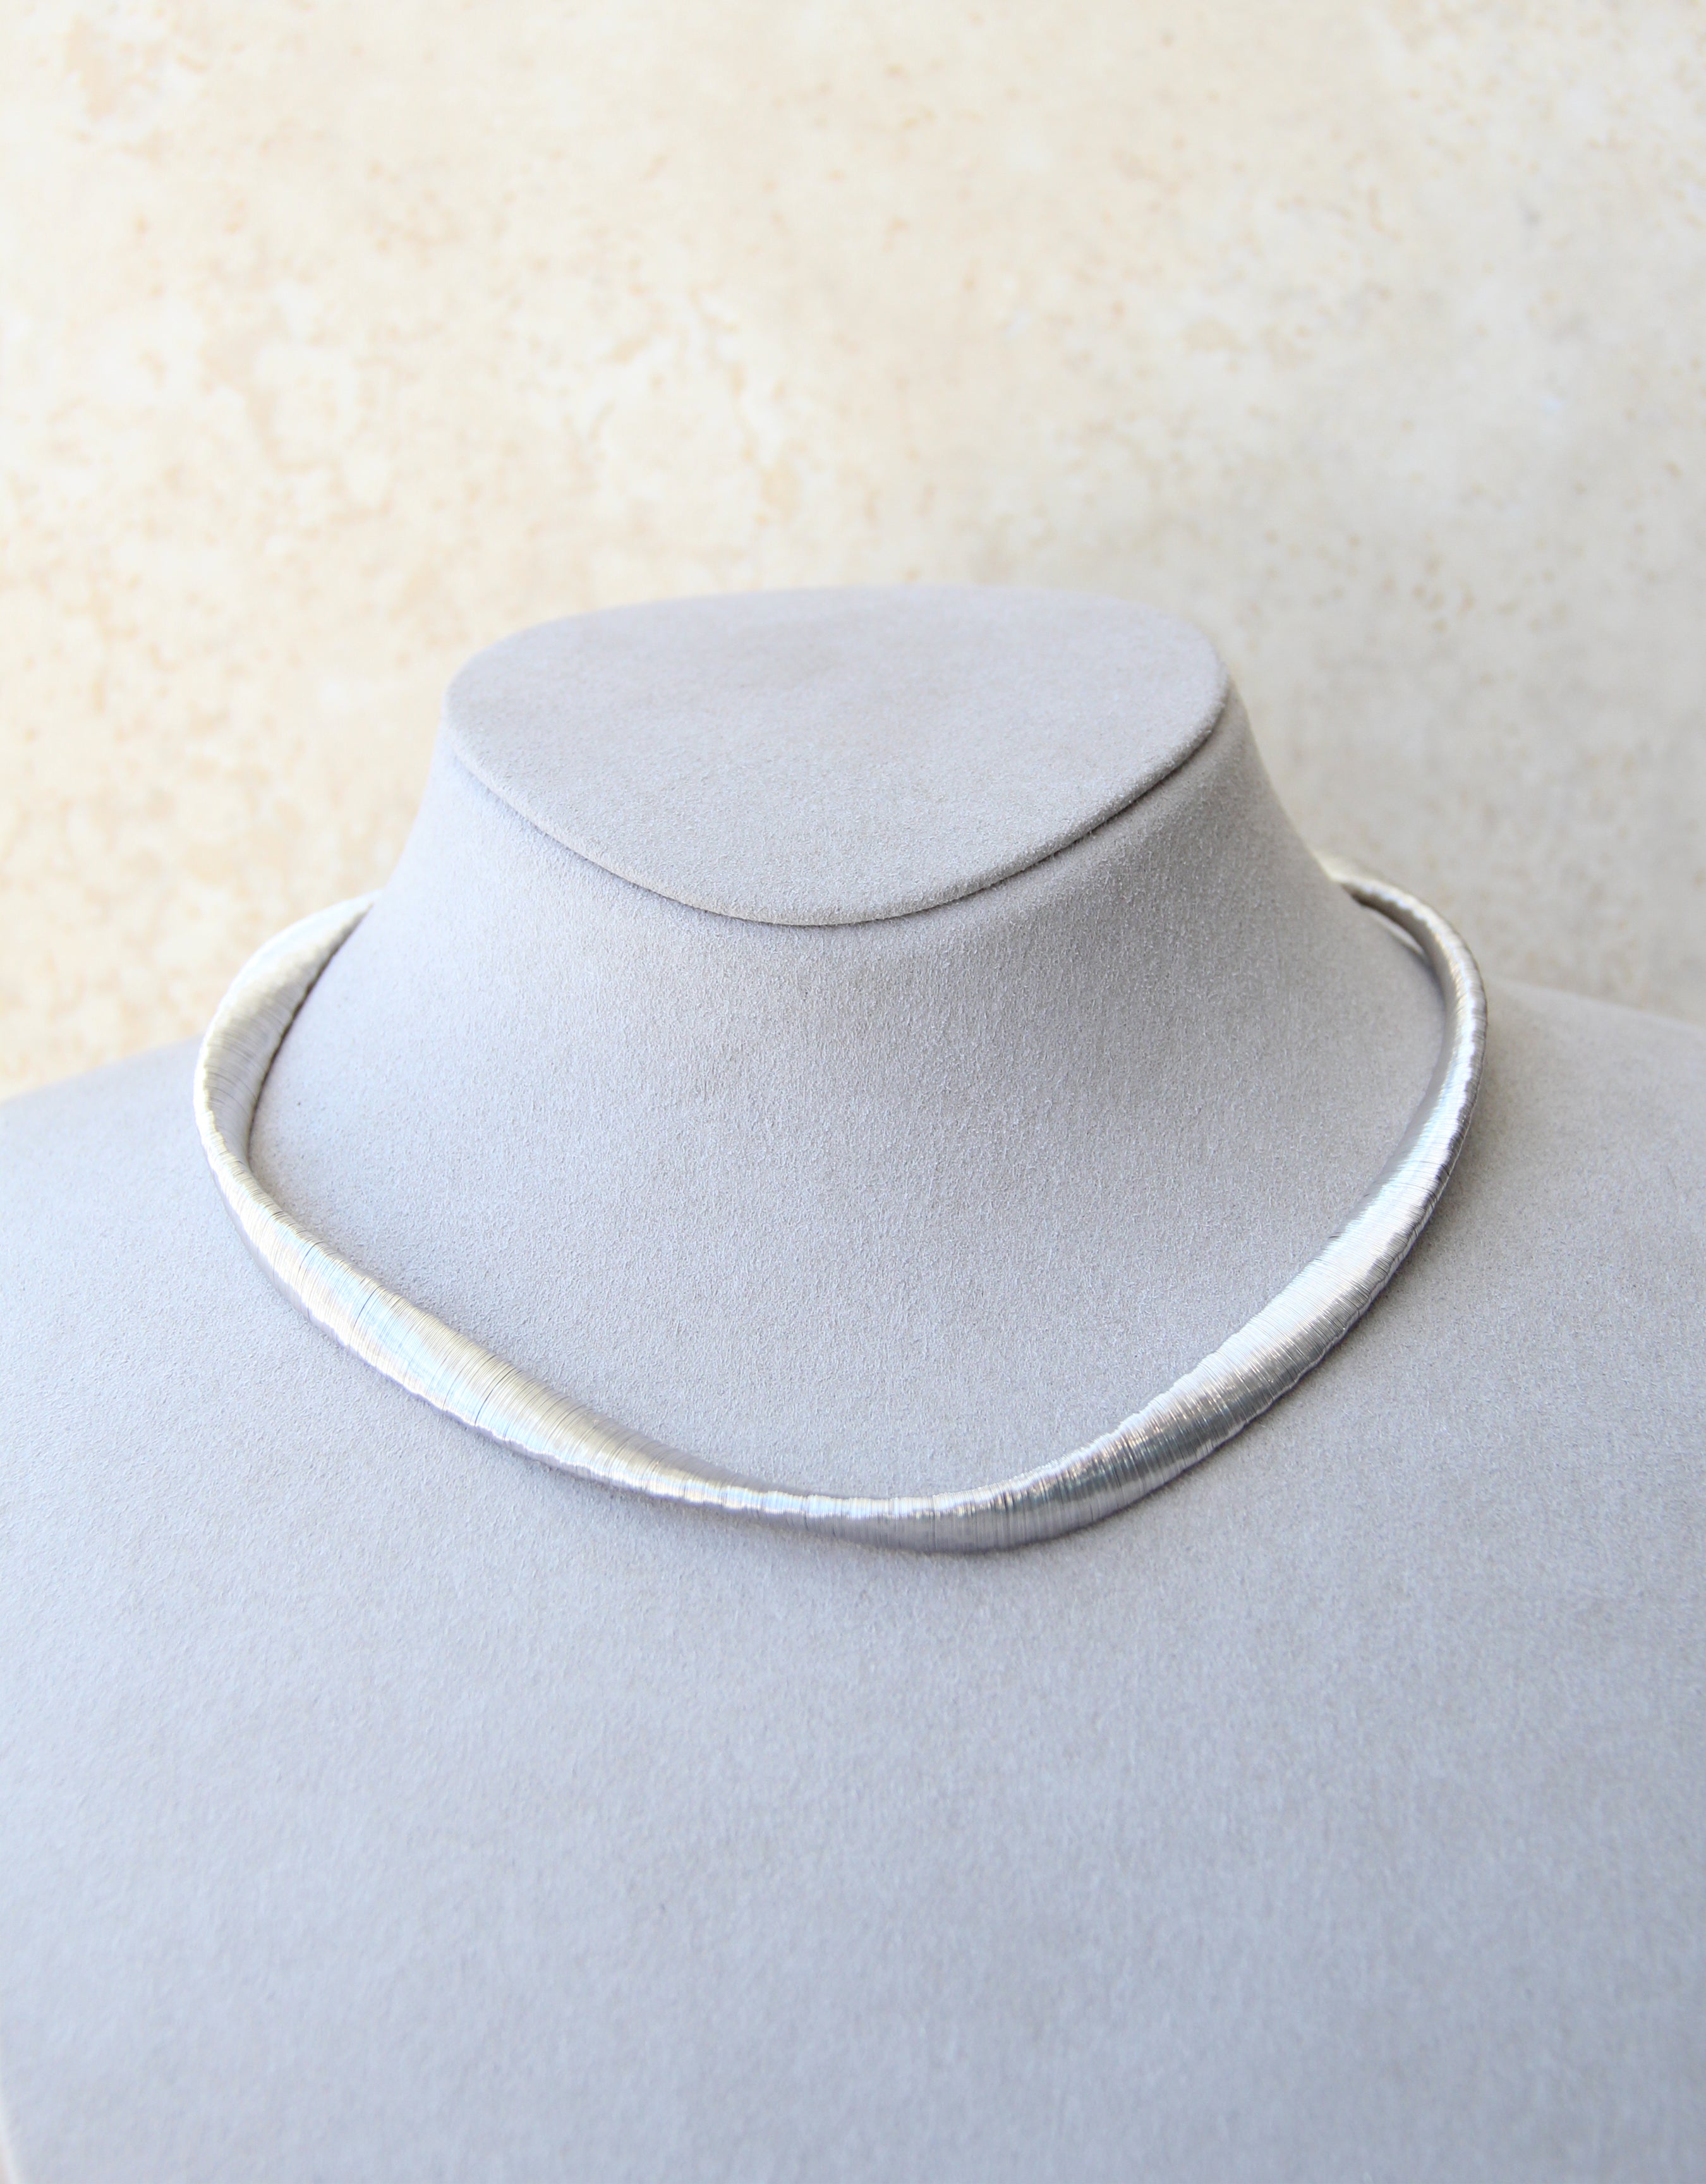 Silver 925 Necklace/Chocker